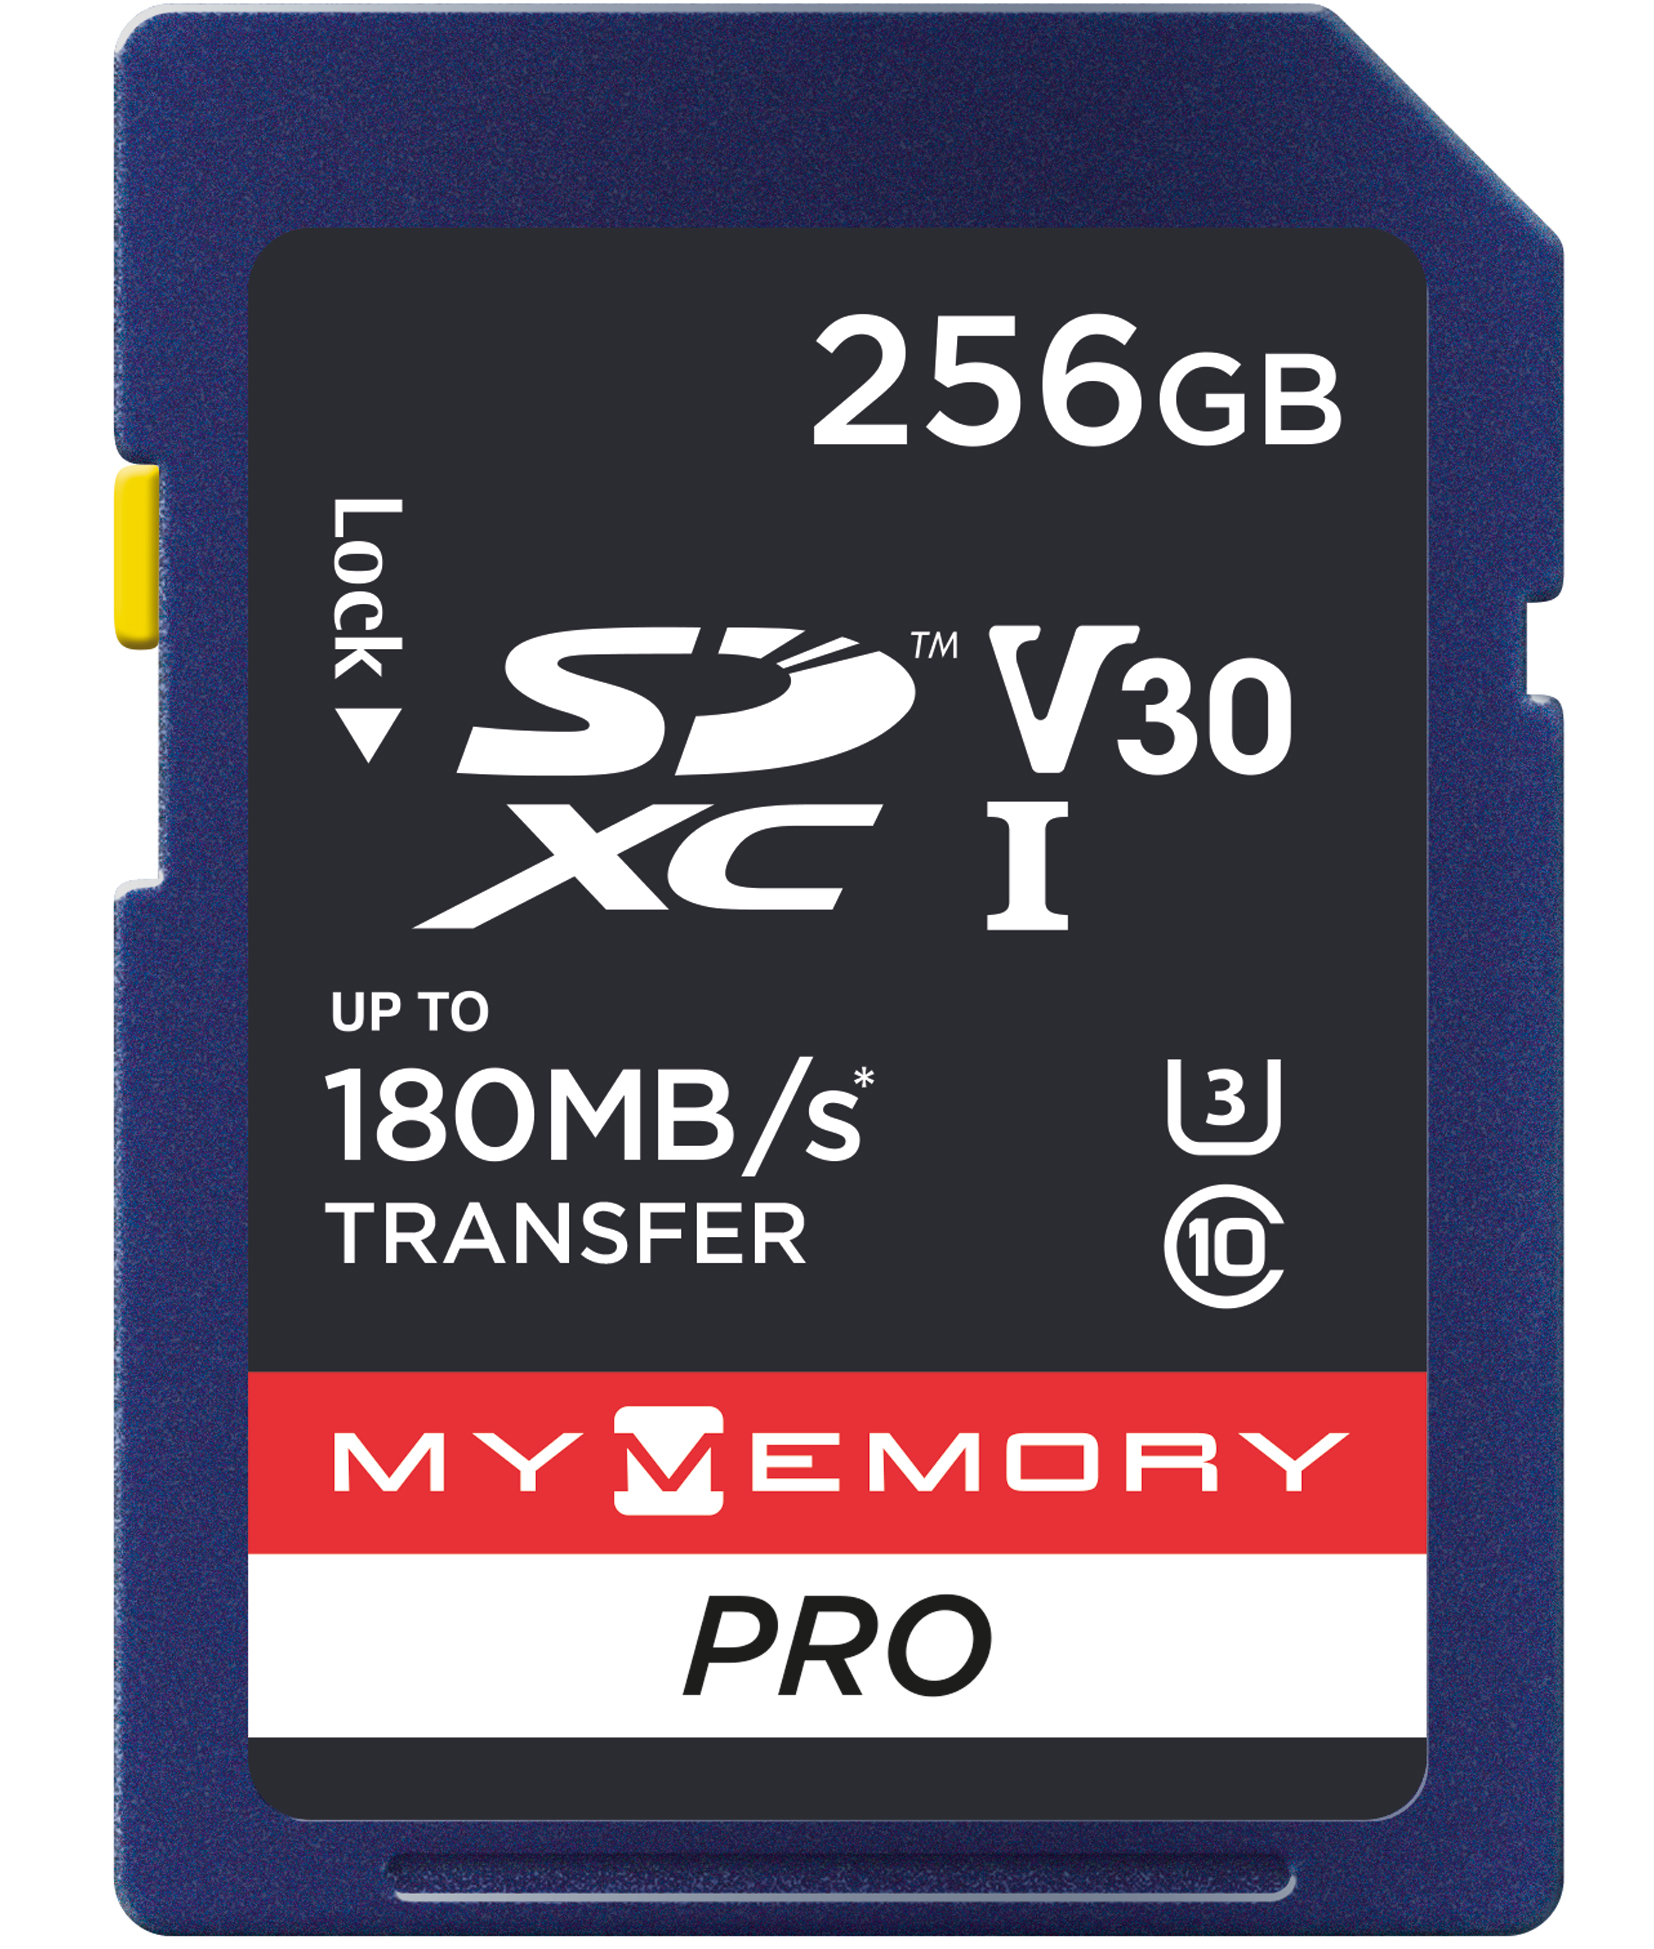 MyMemory 256GB V30 PRO SD Card (SDXC) UHS-I U3 - 180MB/s